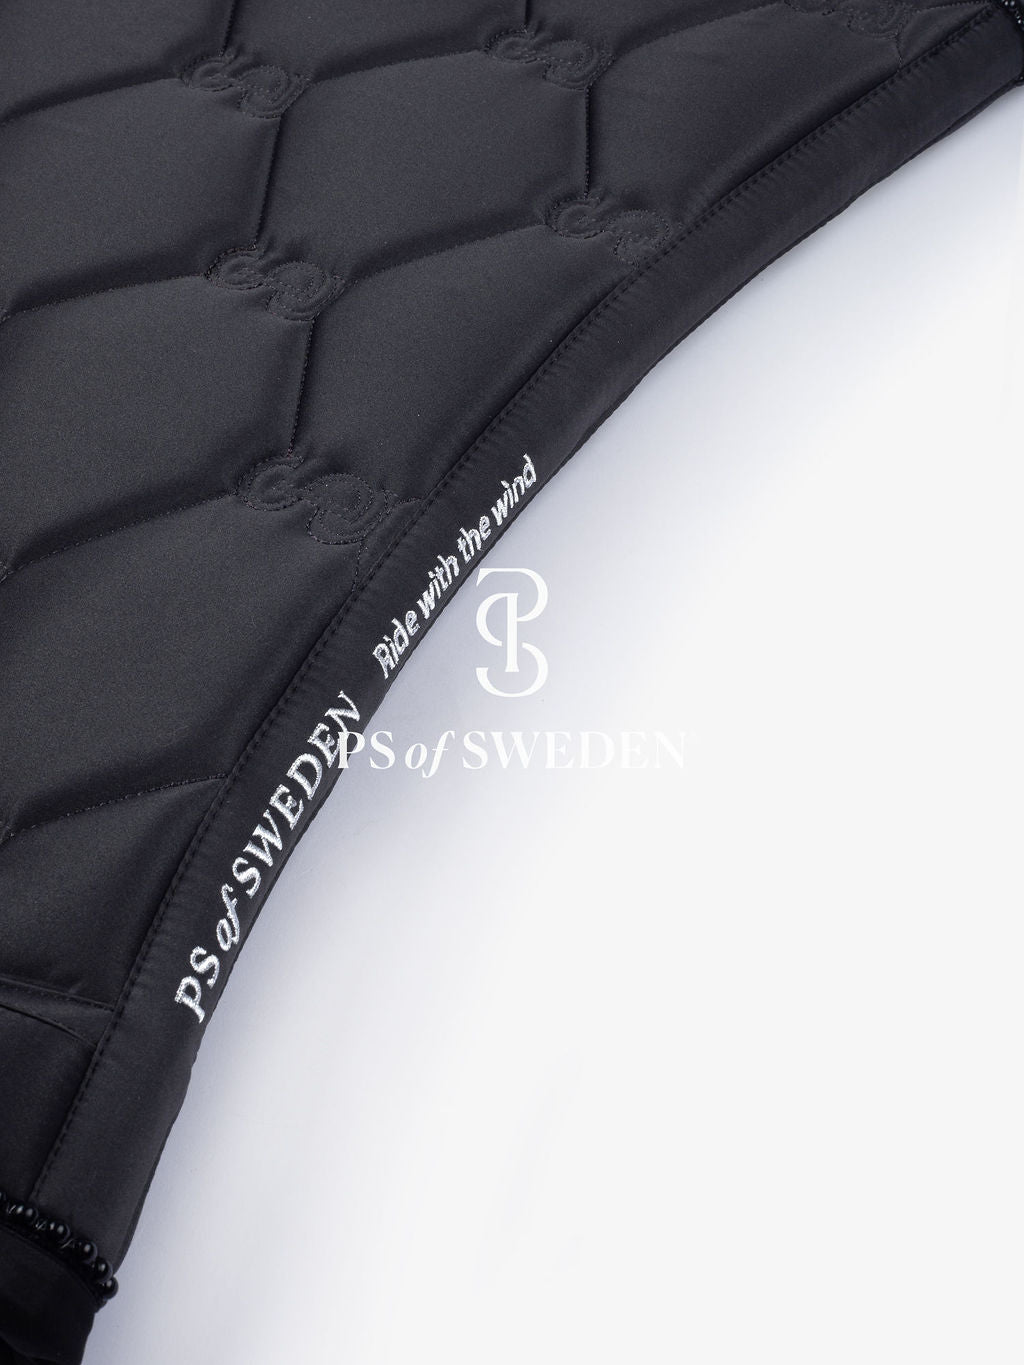 PS of Sweden -  Limited Edition Pearl Ruffle Dressage Saddlepad - Dark Grey